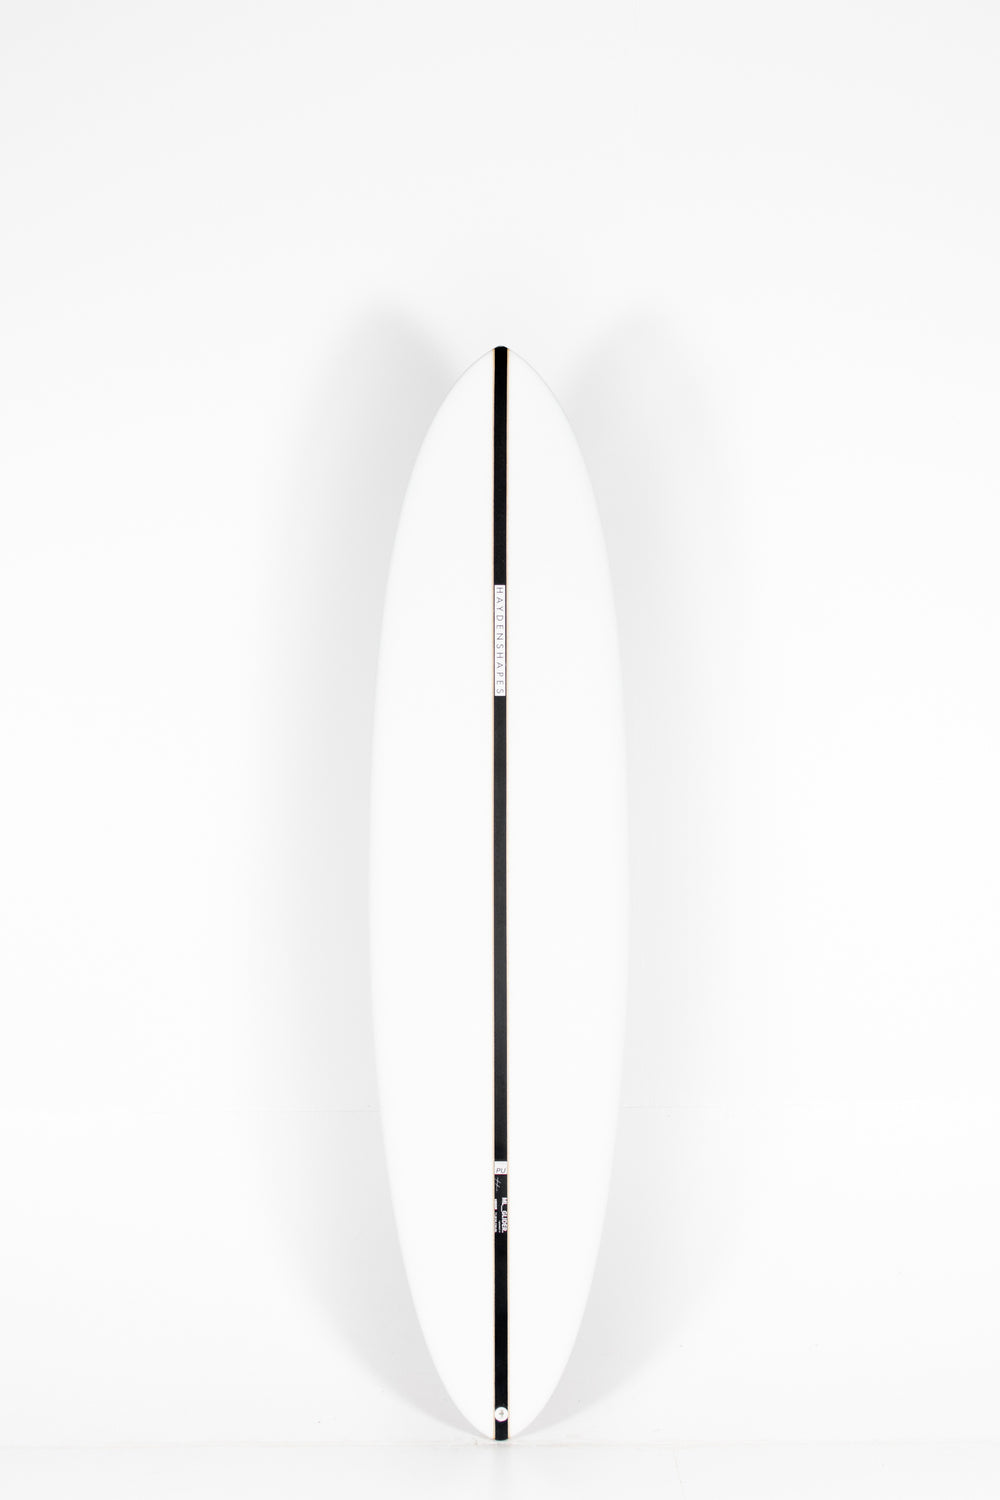 Pukas Surf Shop - HaydenShapes Surfboard - MID LENGTH GLIDER - 7'1